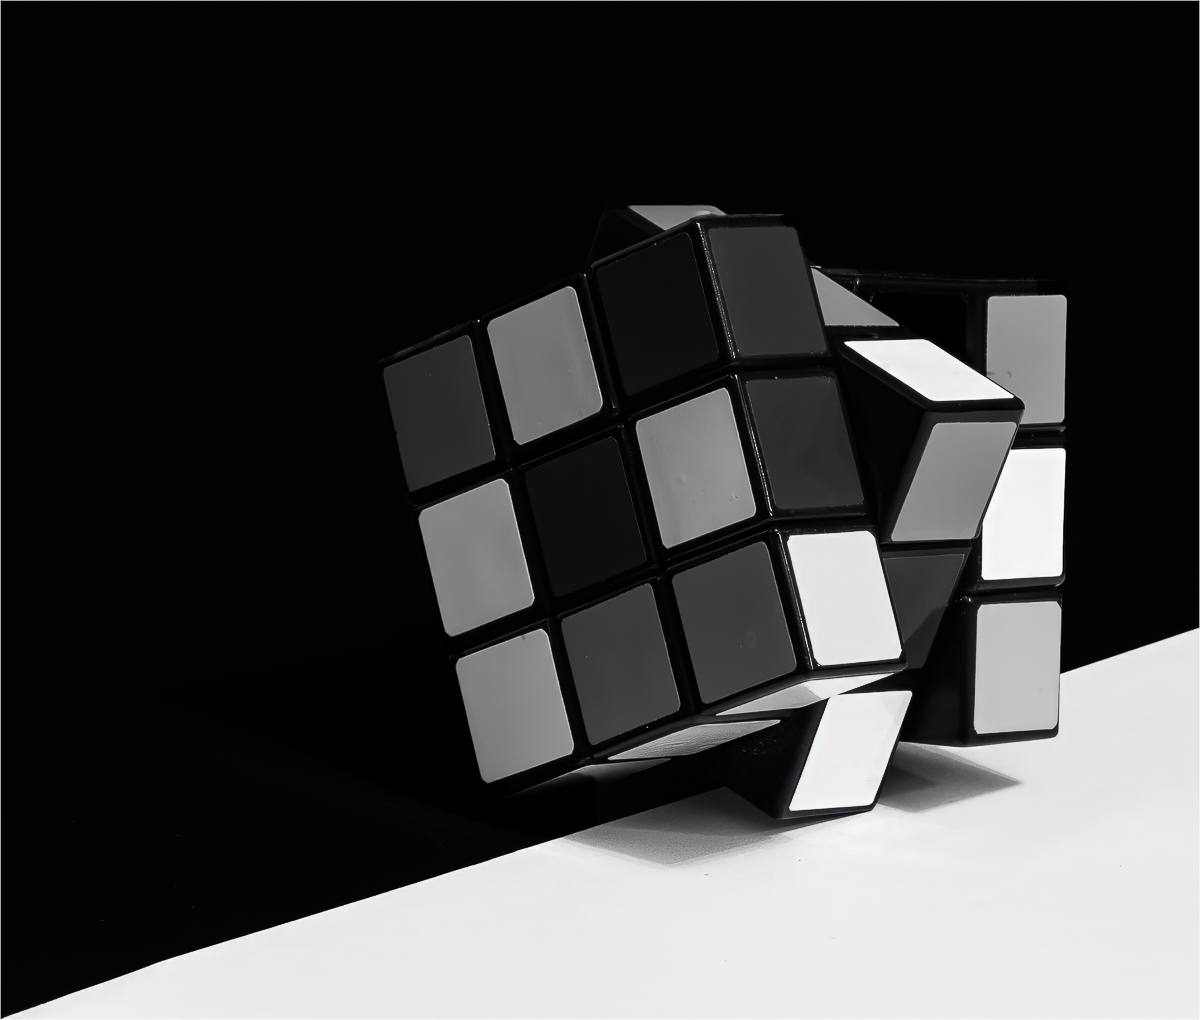 Rubik's Black and White Cube by Barbara Asacker